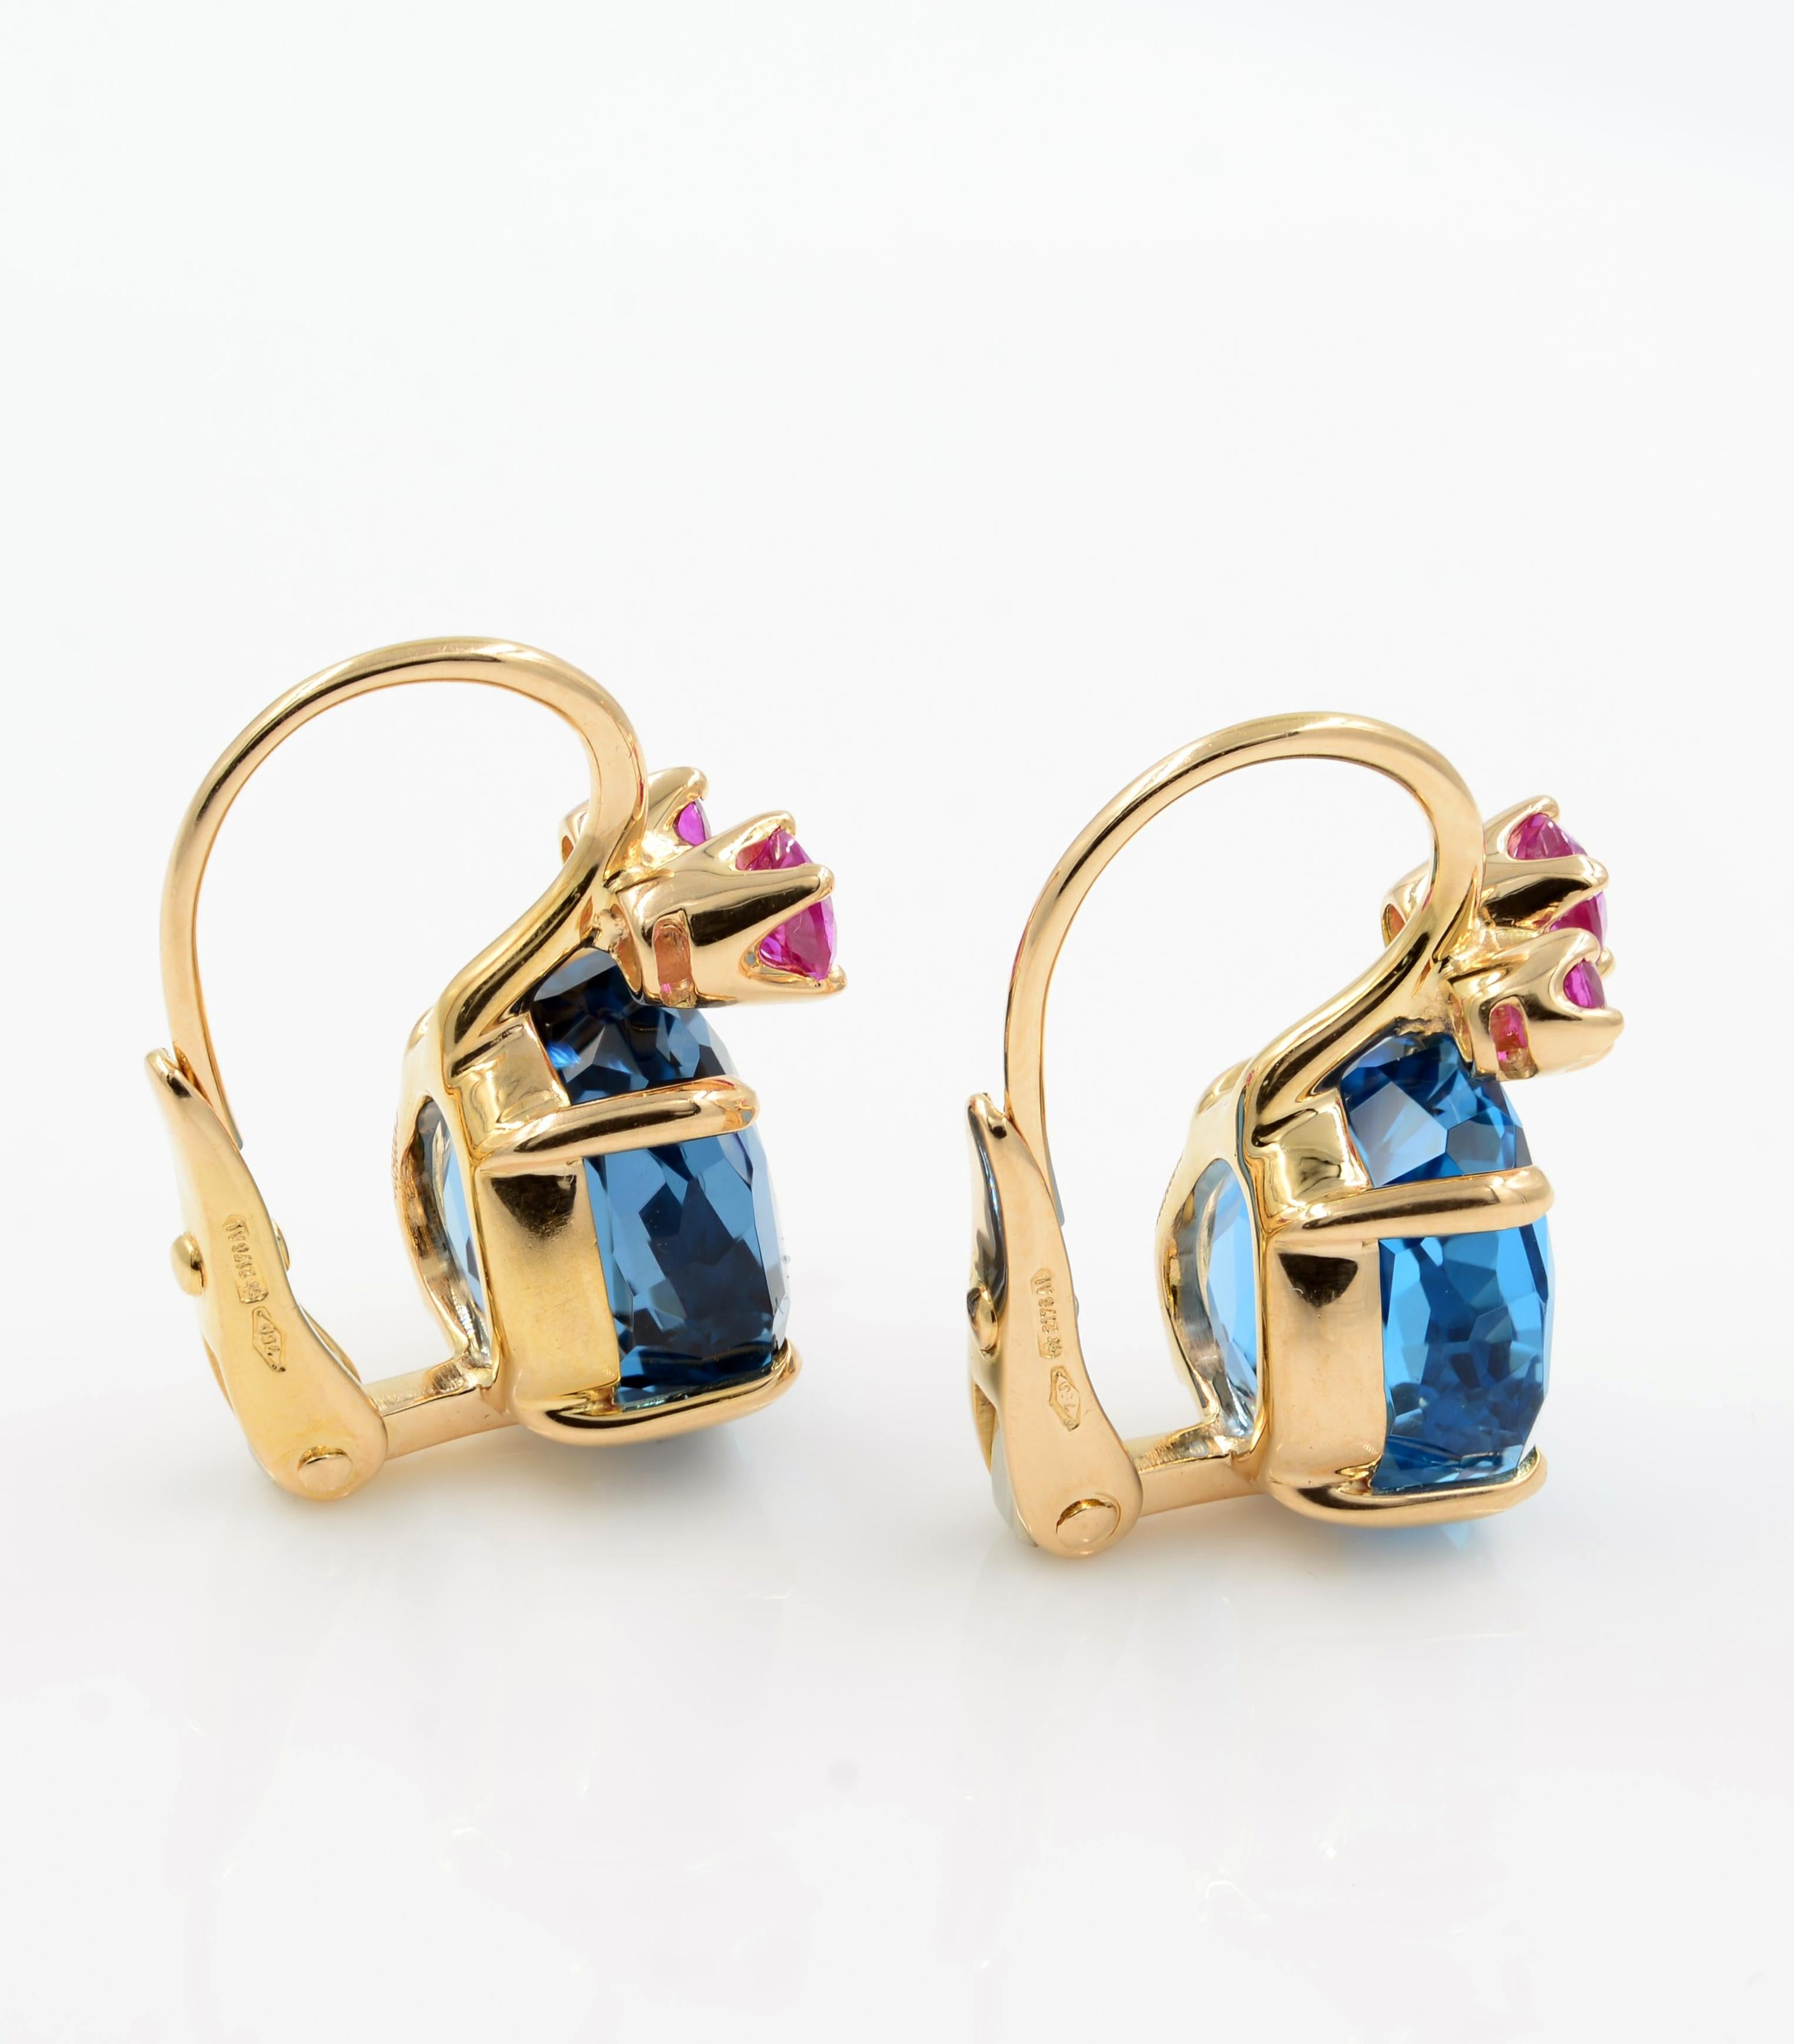 pomellato london blue topaz earrings